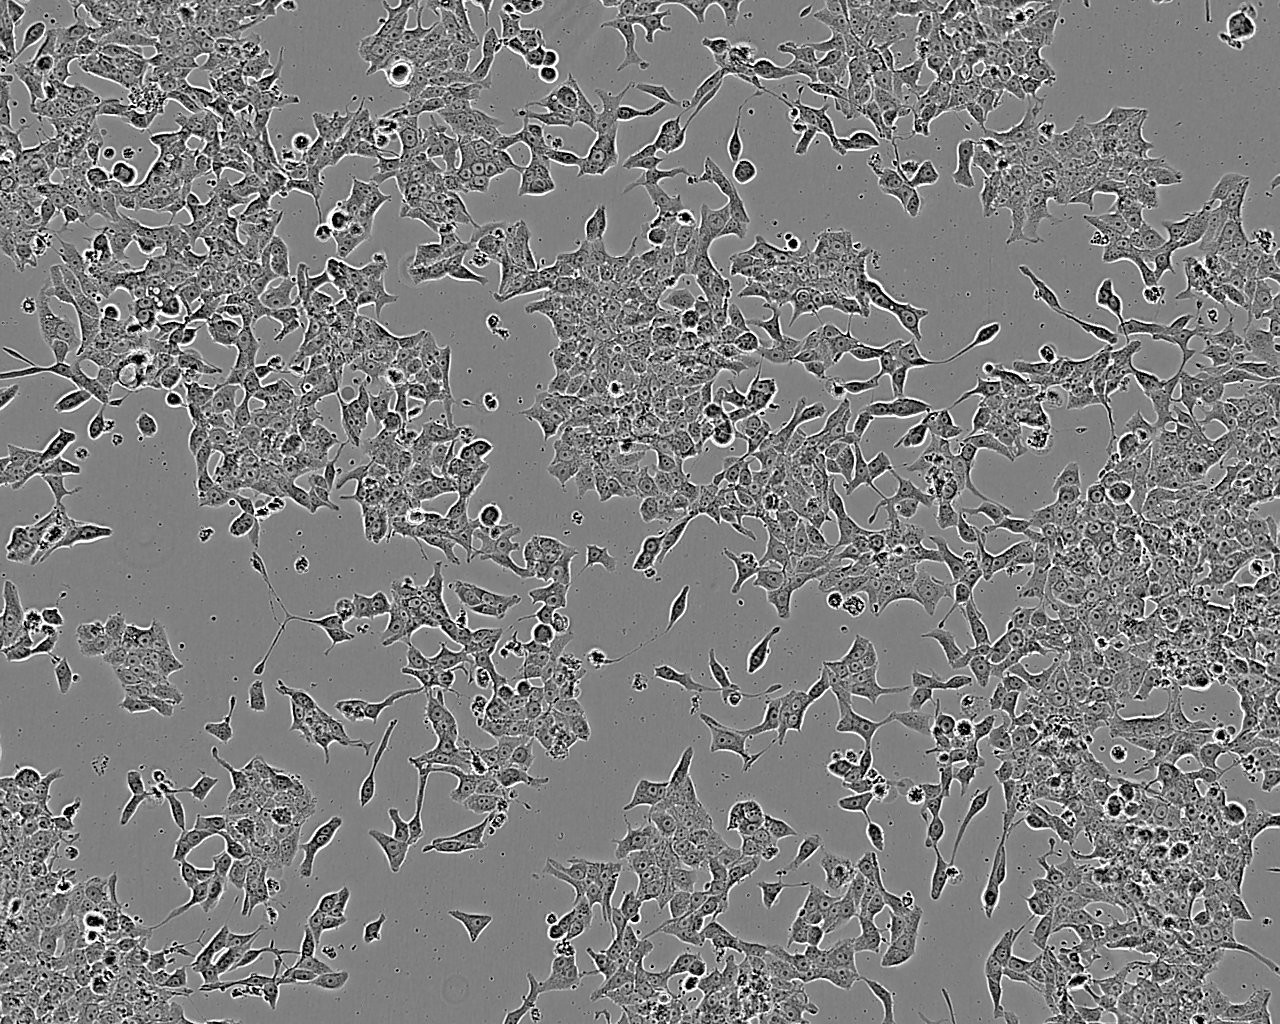 NCI-H747 epithelioid cells人盲肠癌细胞系,NCI-H747 epithelioid cells